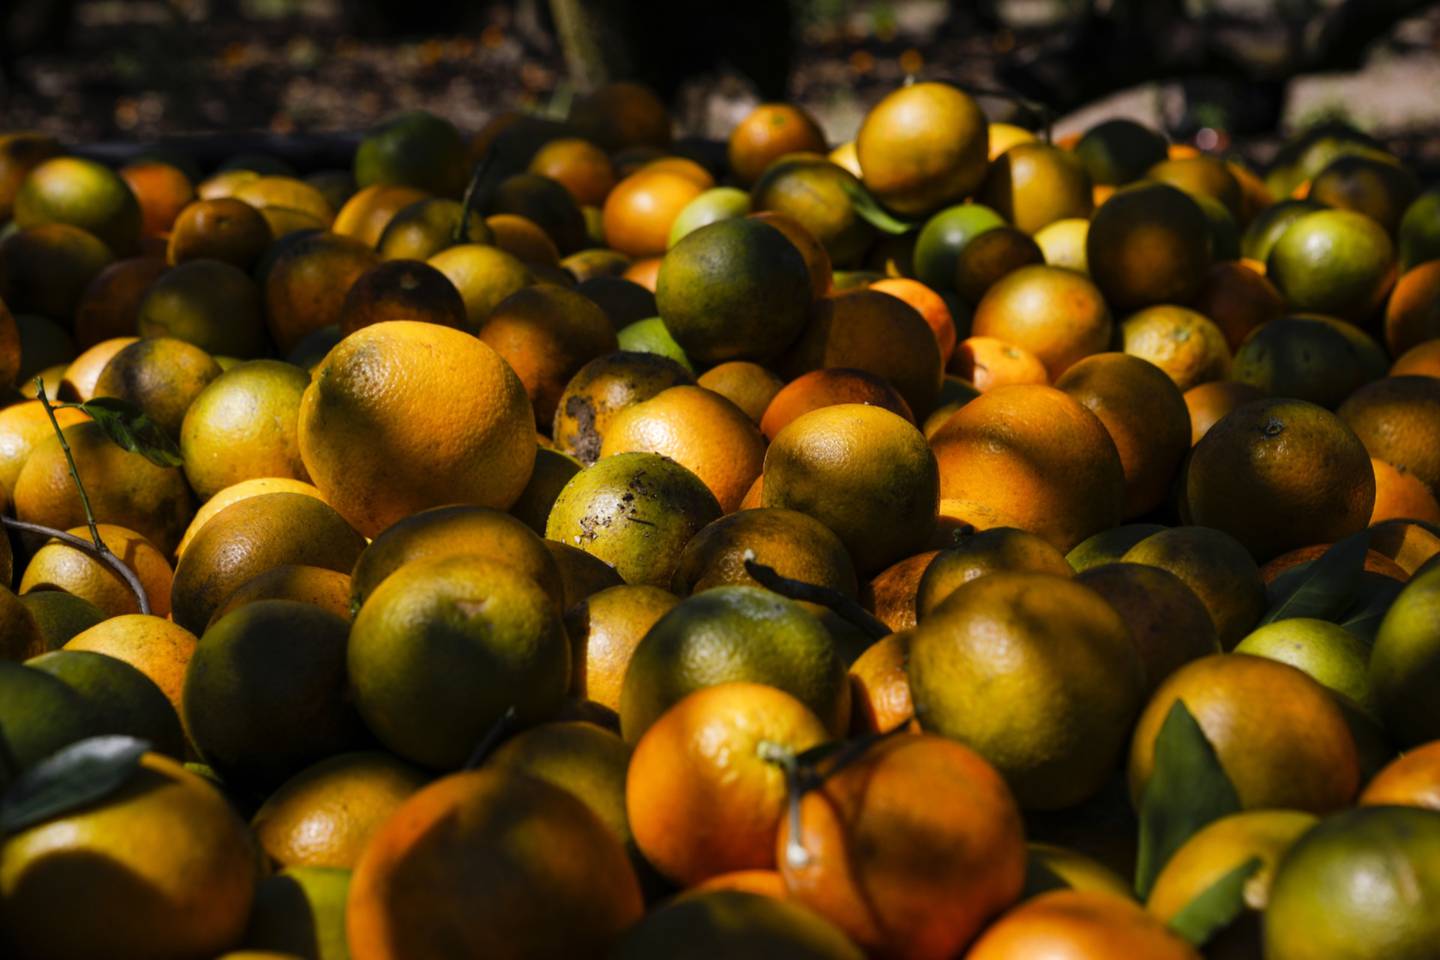 Oranges in a basket during a harvest in Avon Park, Florida.